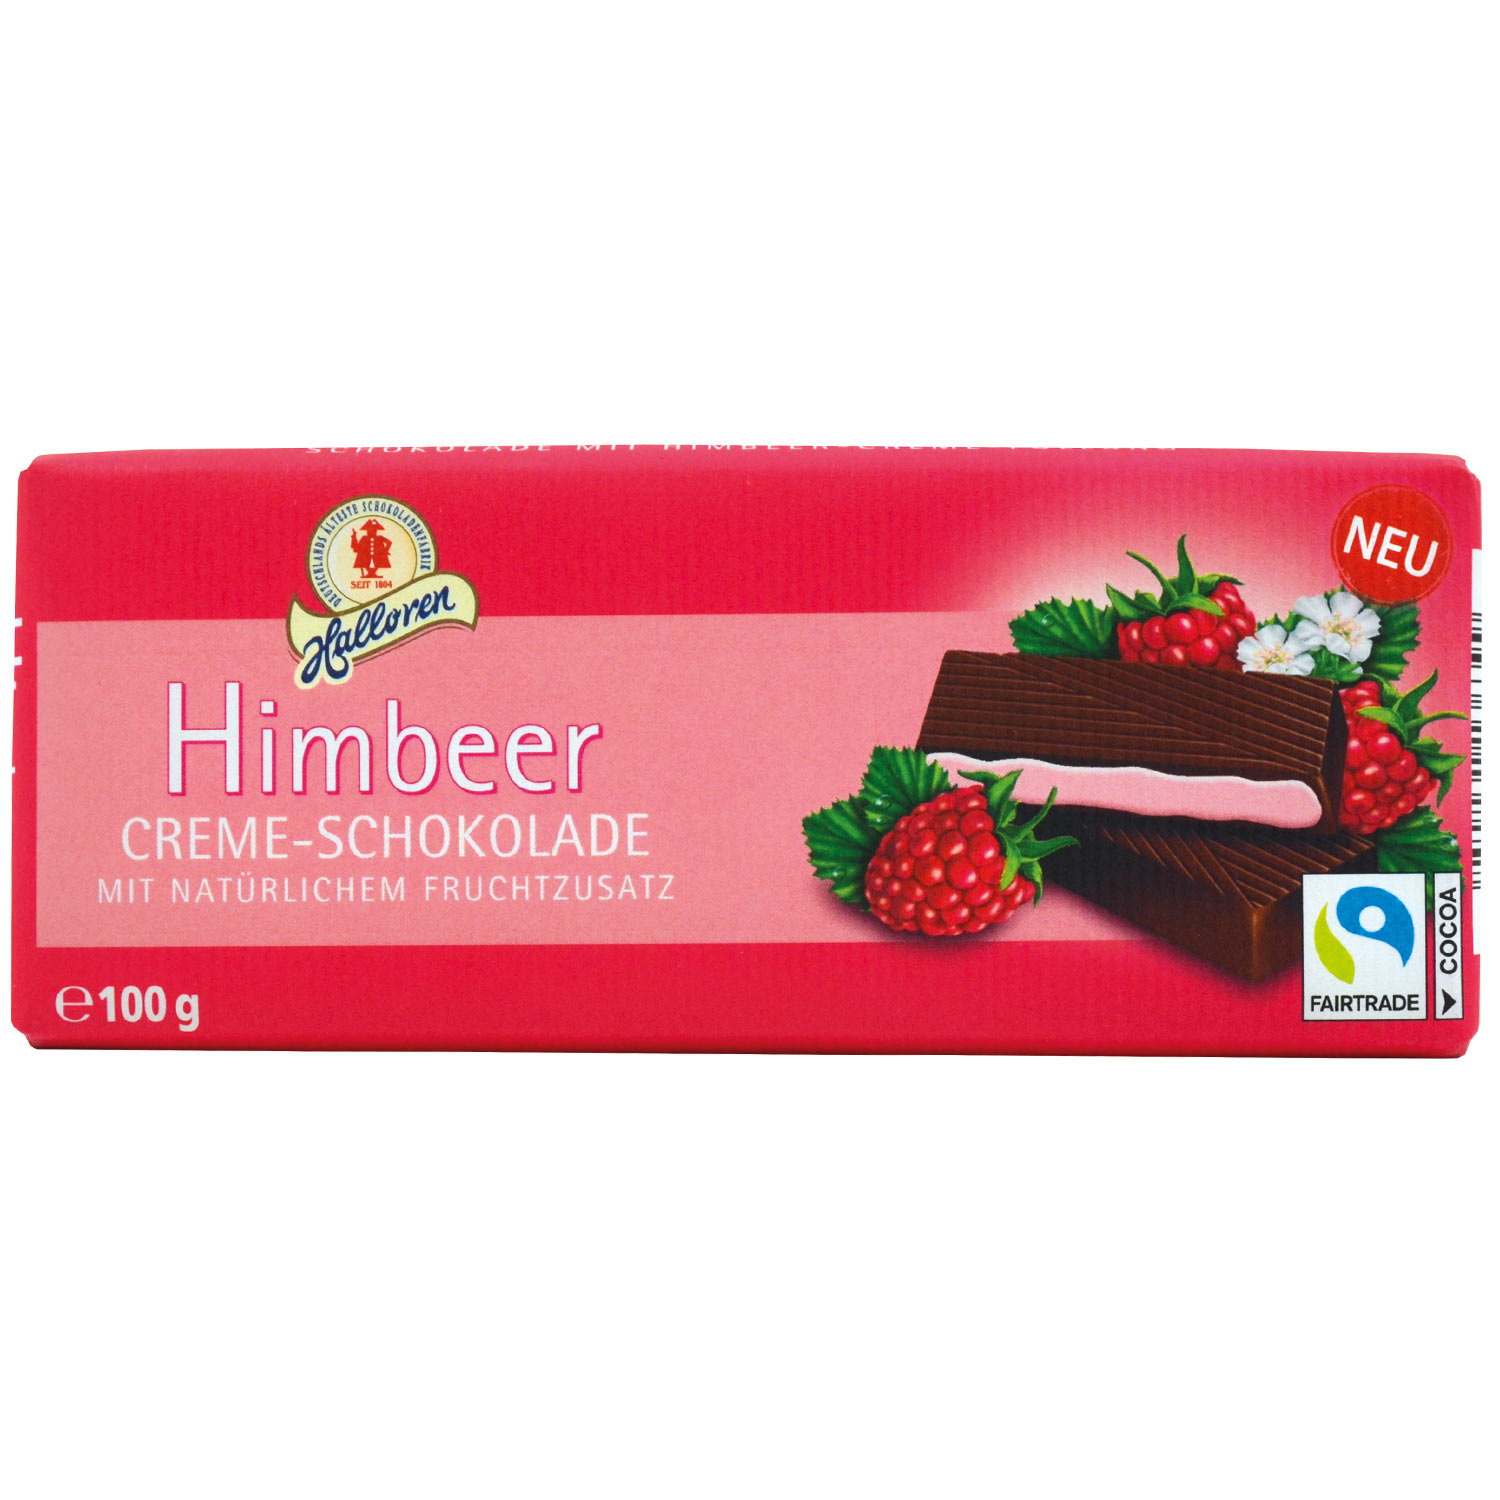 Halloren - Creme Schokolade Himbeer/Chokladkaka med Hallonkräm, 100 g